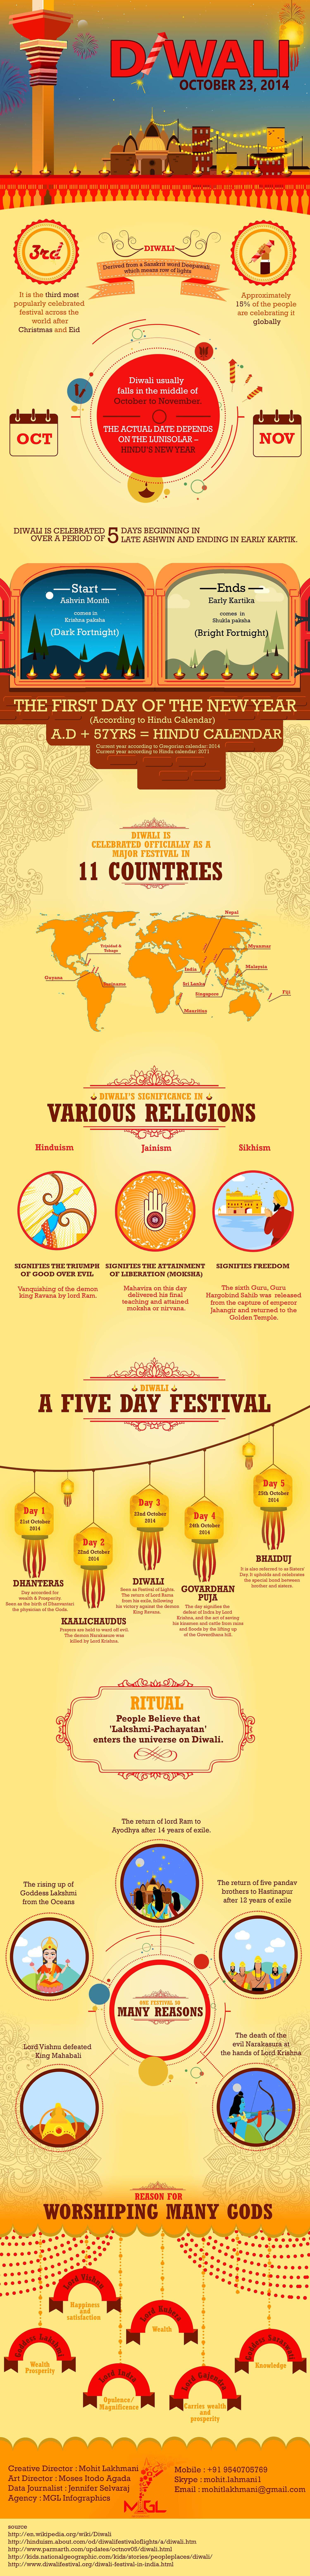 Diwali Infographic